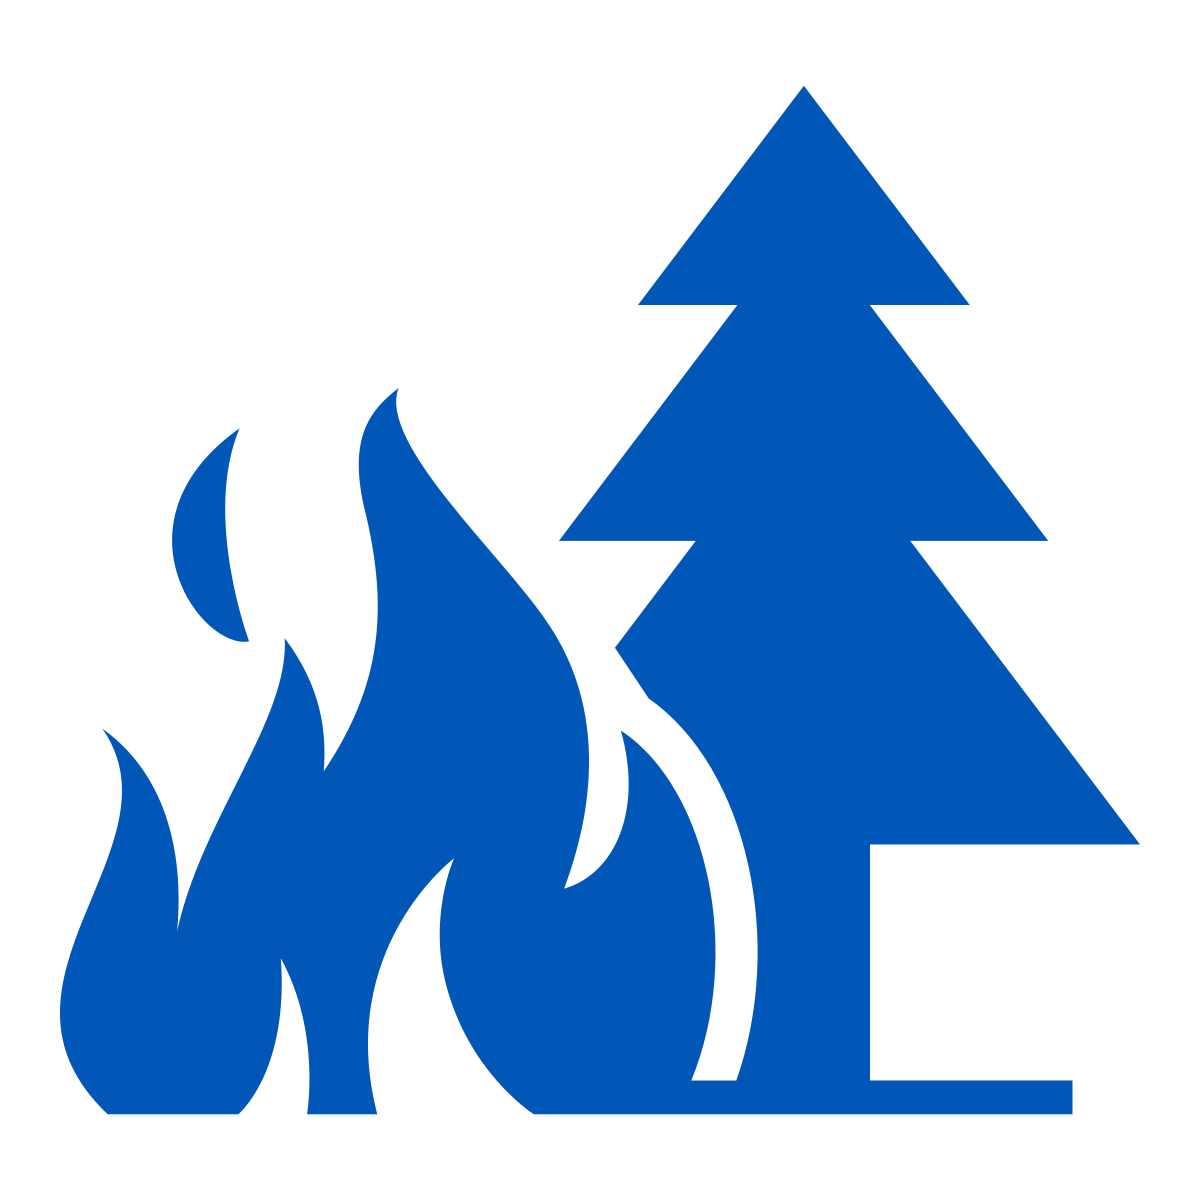 Wildfire icon for Emergency Preparedness